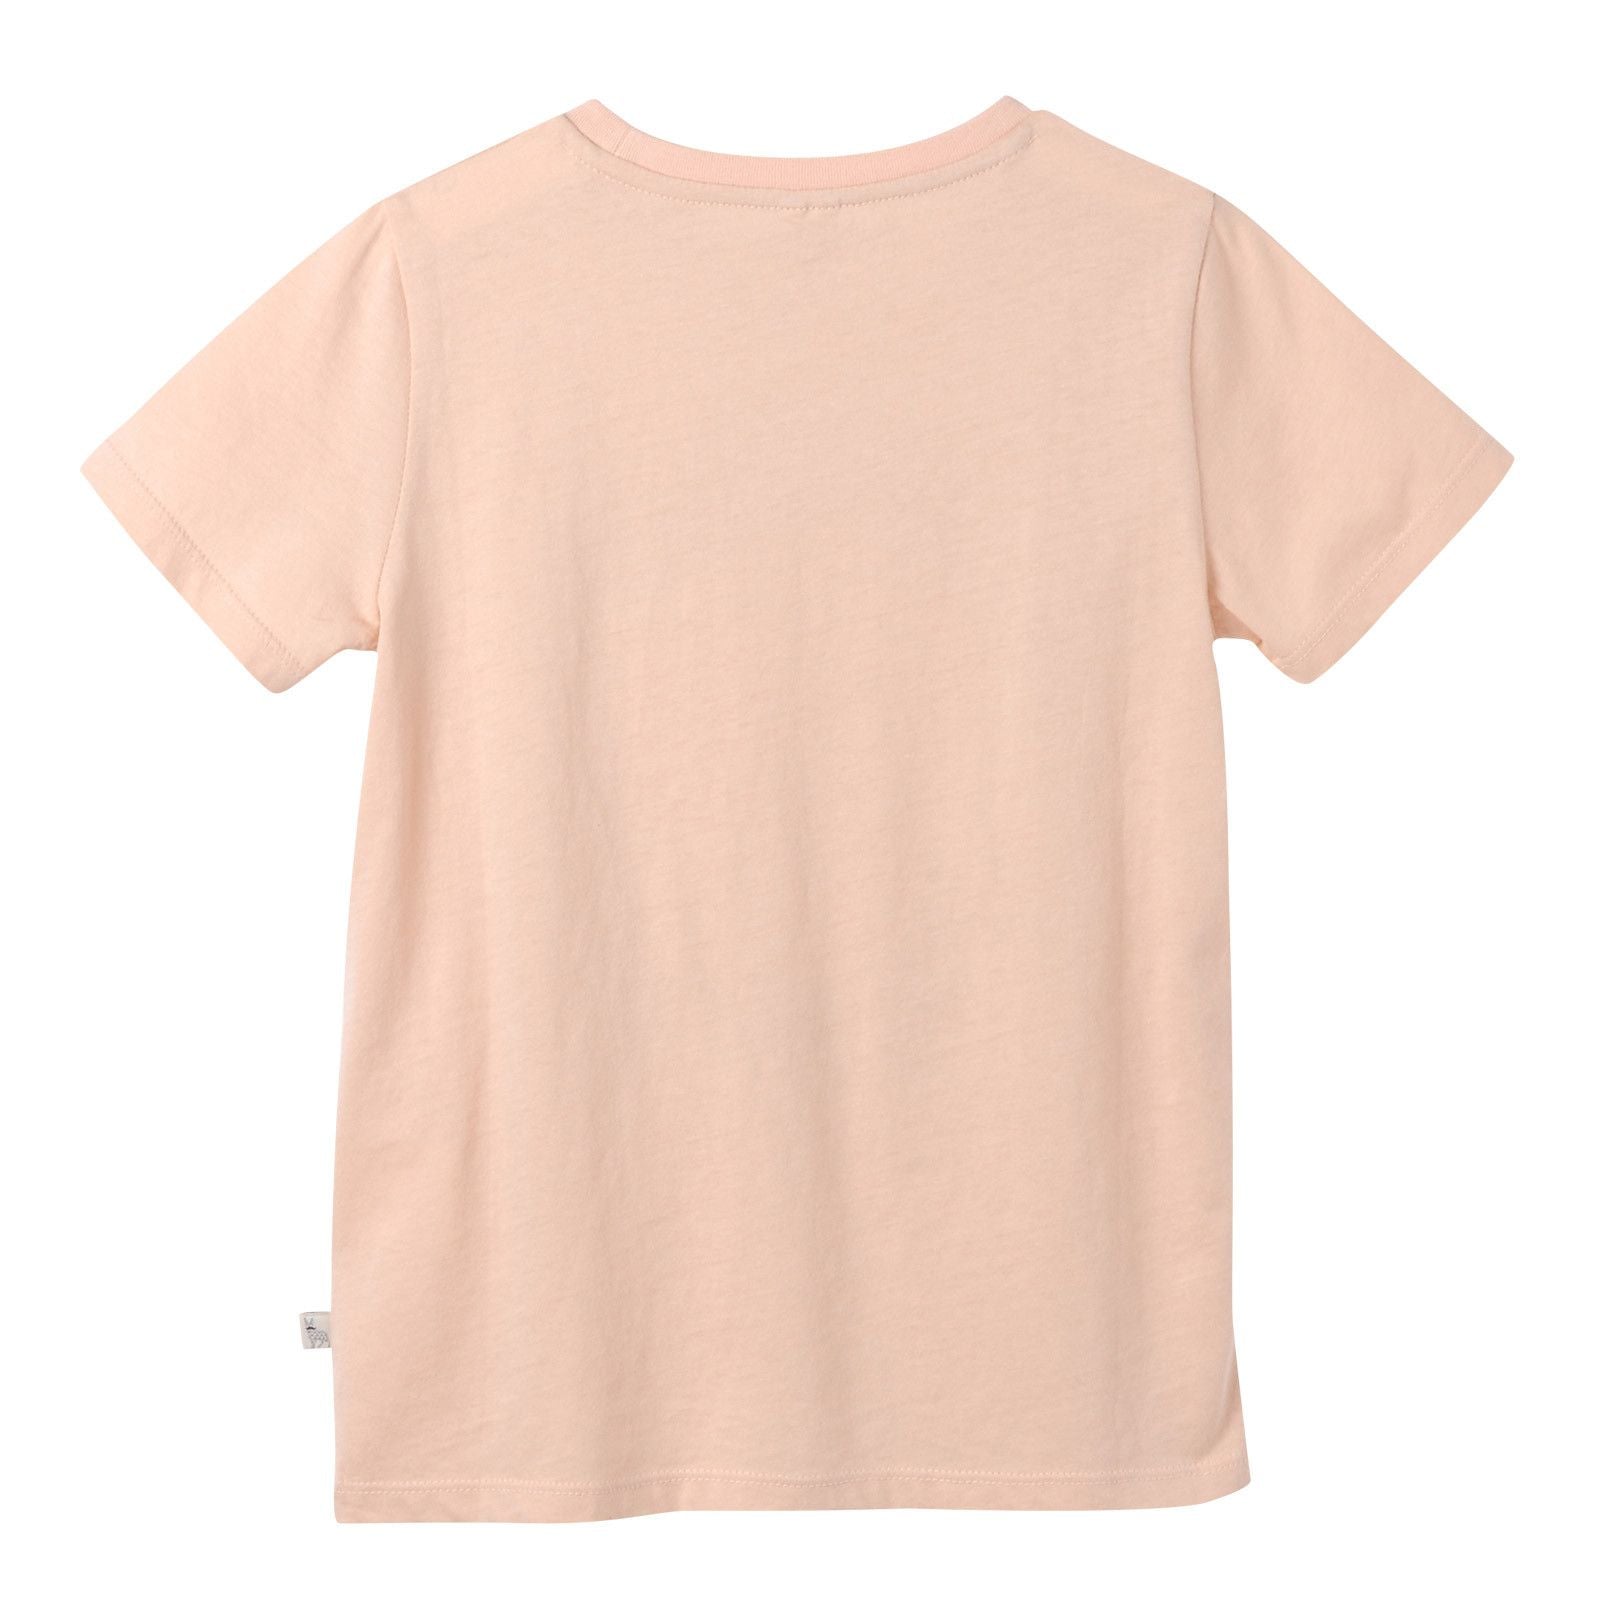 Girls Pink Sugar Skull Printed Cotton T-Shirt - CÉMAROSE | Children's Fashion Store - 2